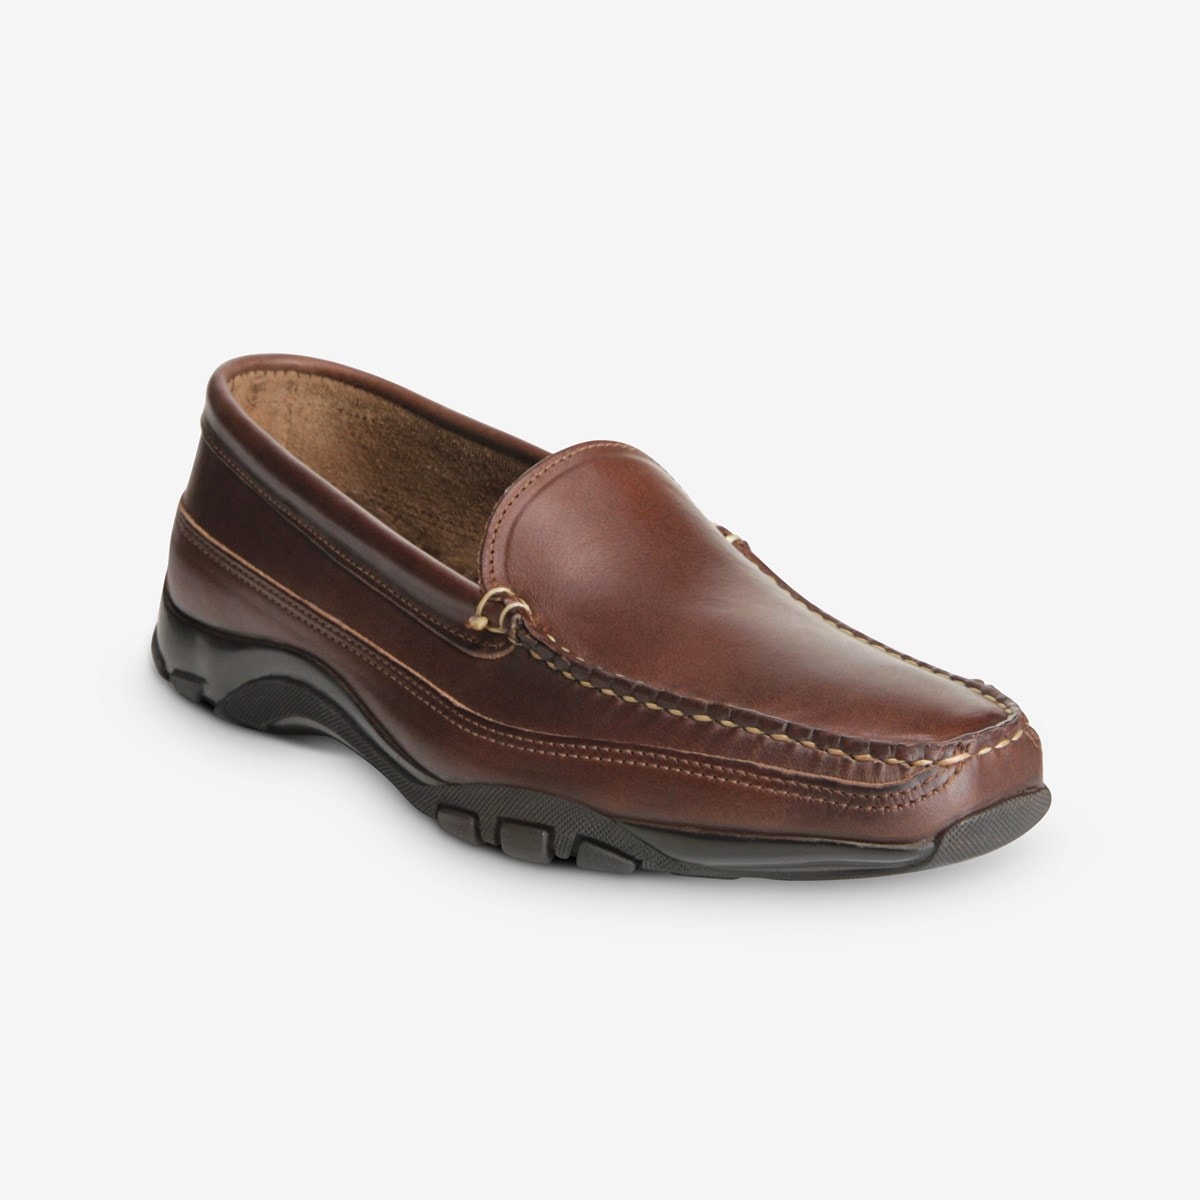 Allen Edmonds Boulder Brown Leather Driving Loafers Shoes Mens 9D Zapatos Zapatos para hombre Mocasines y sin cordones 